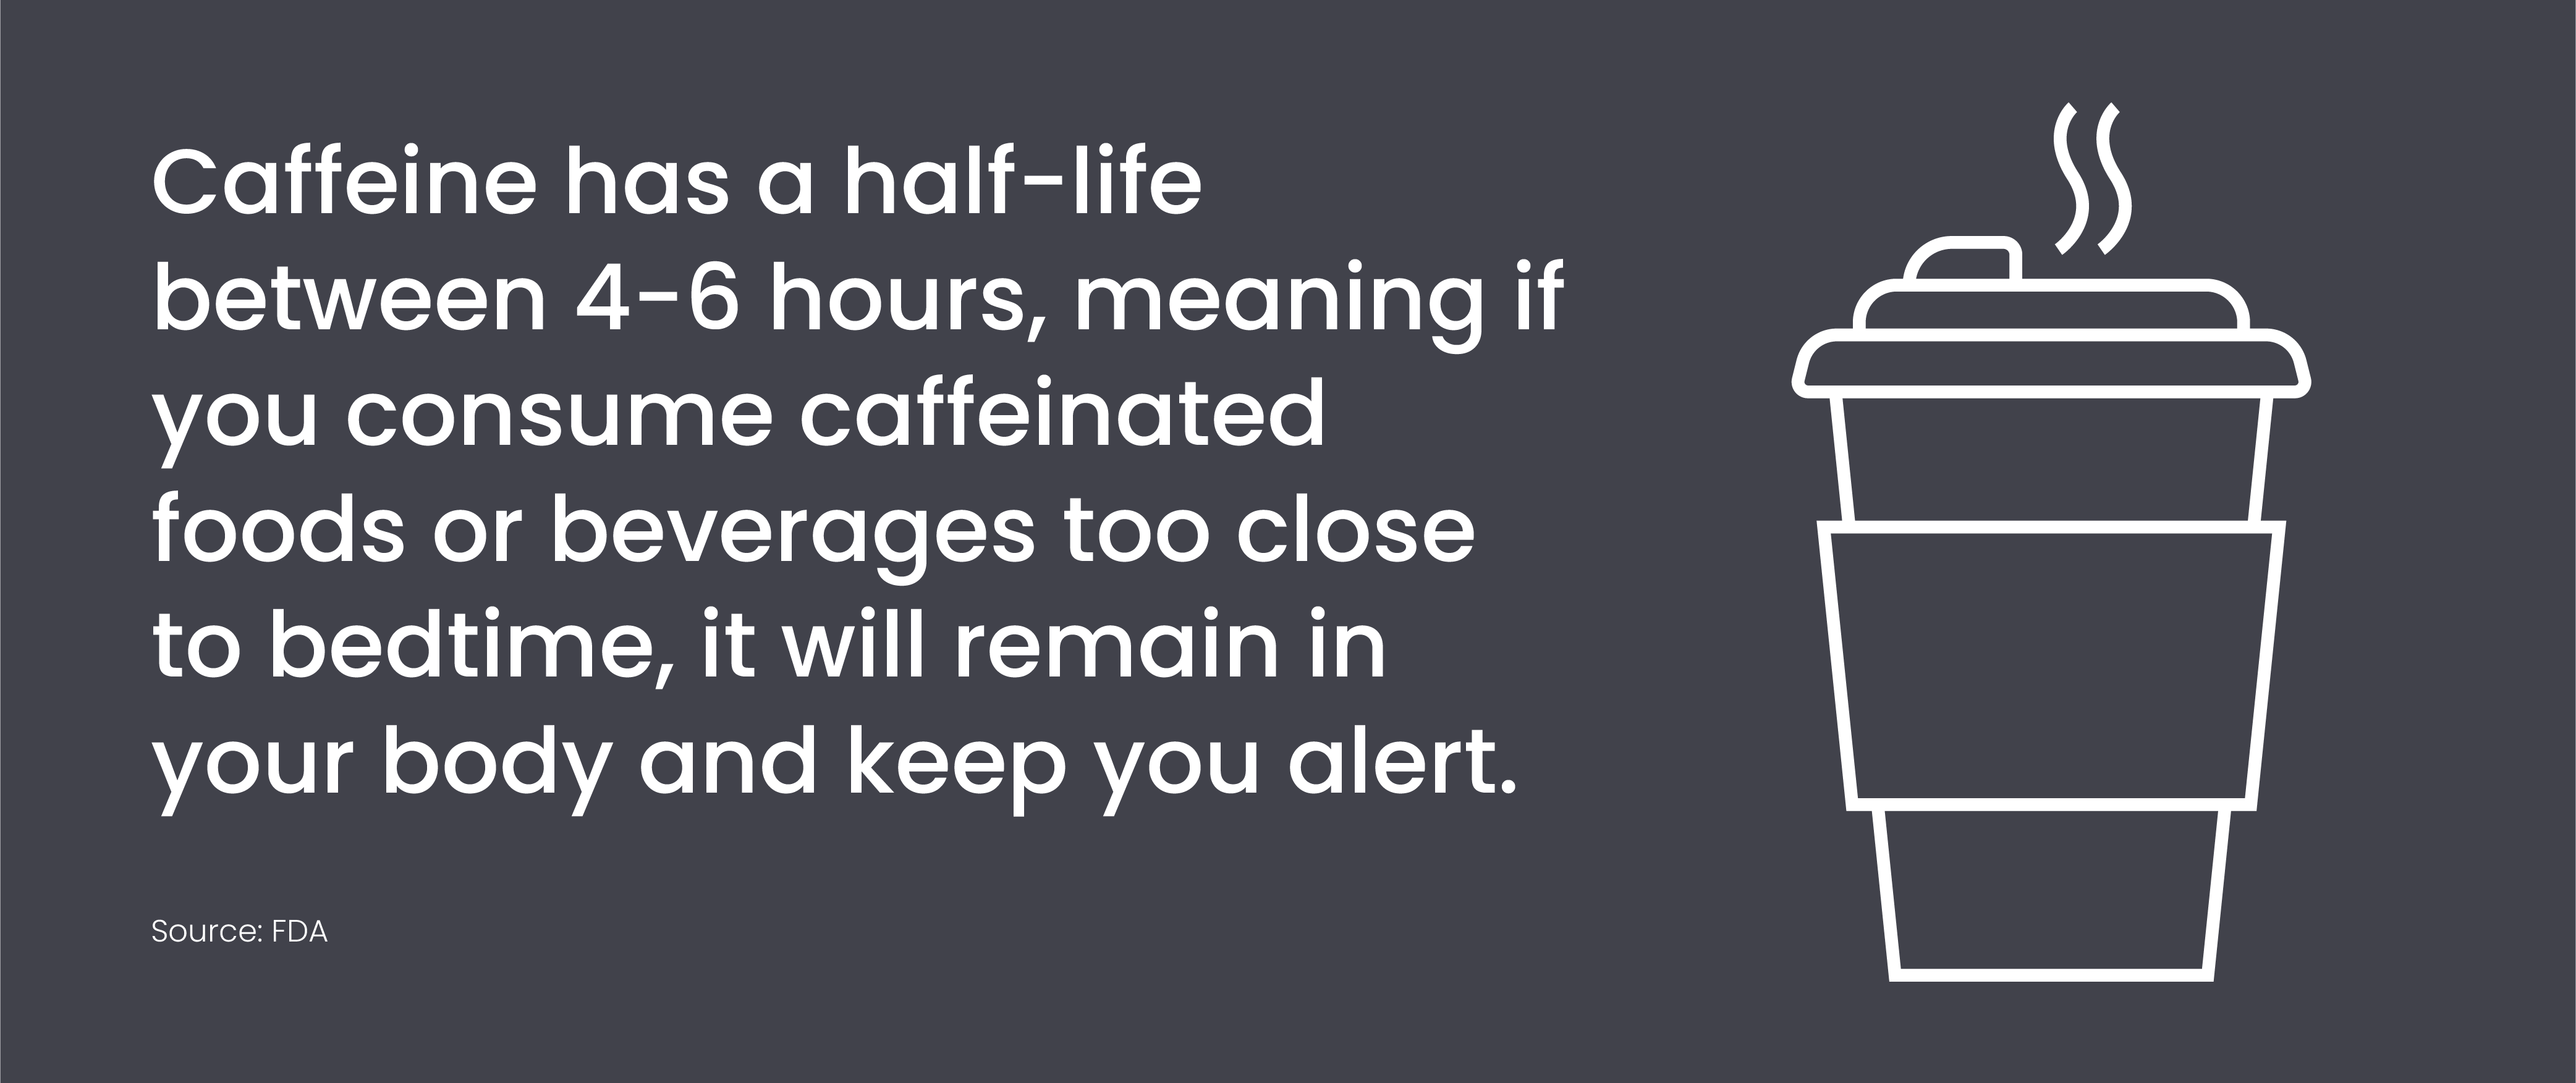 Caffeine has a half-life between 4-6 hours